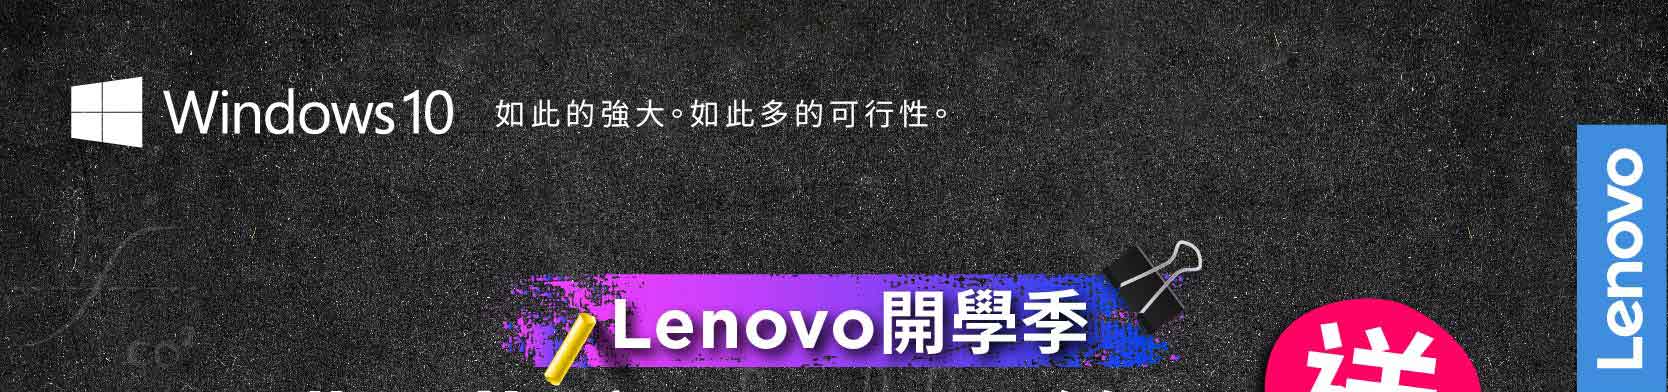 Lenovo 2020 BTS Promotions